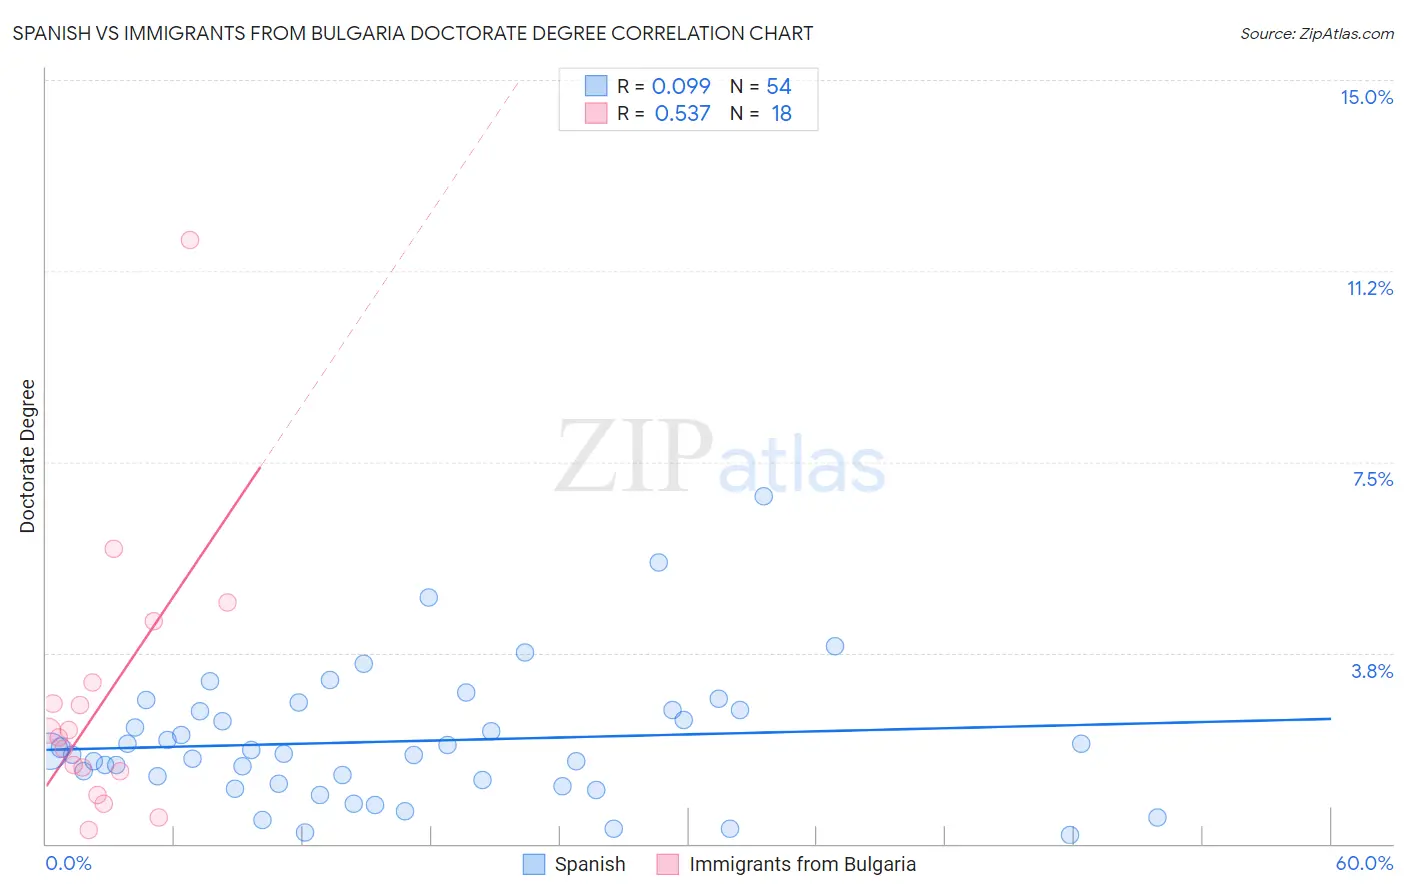 Spanish vs Immigrants from Bulgaria Doctorate Degree